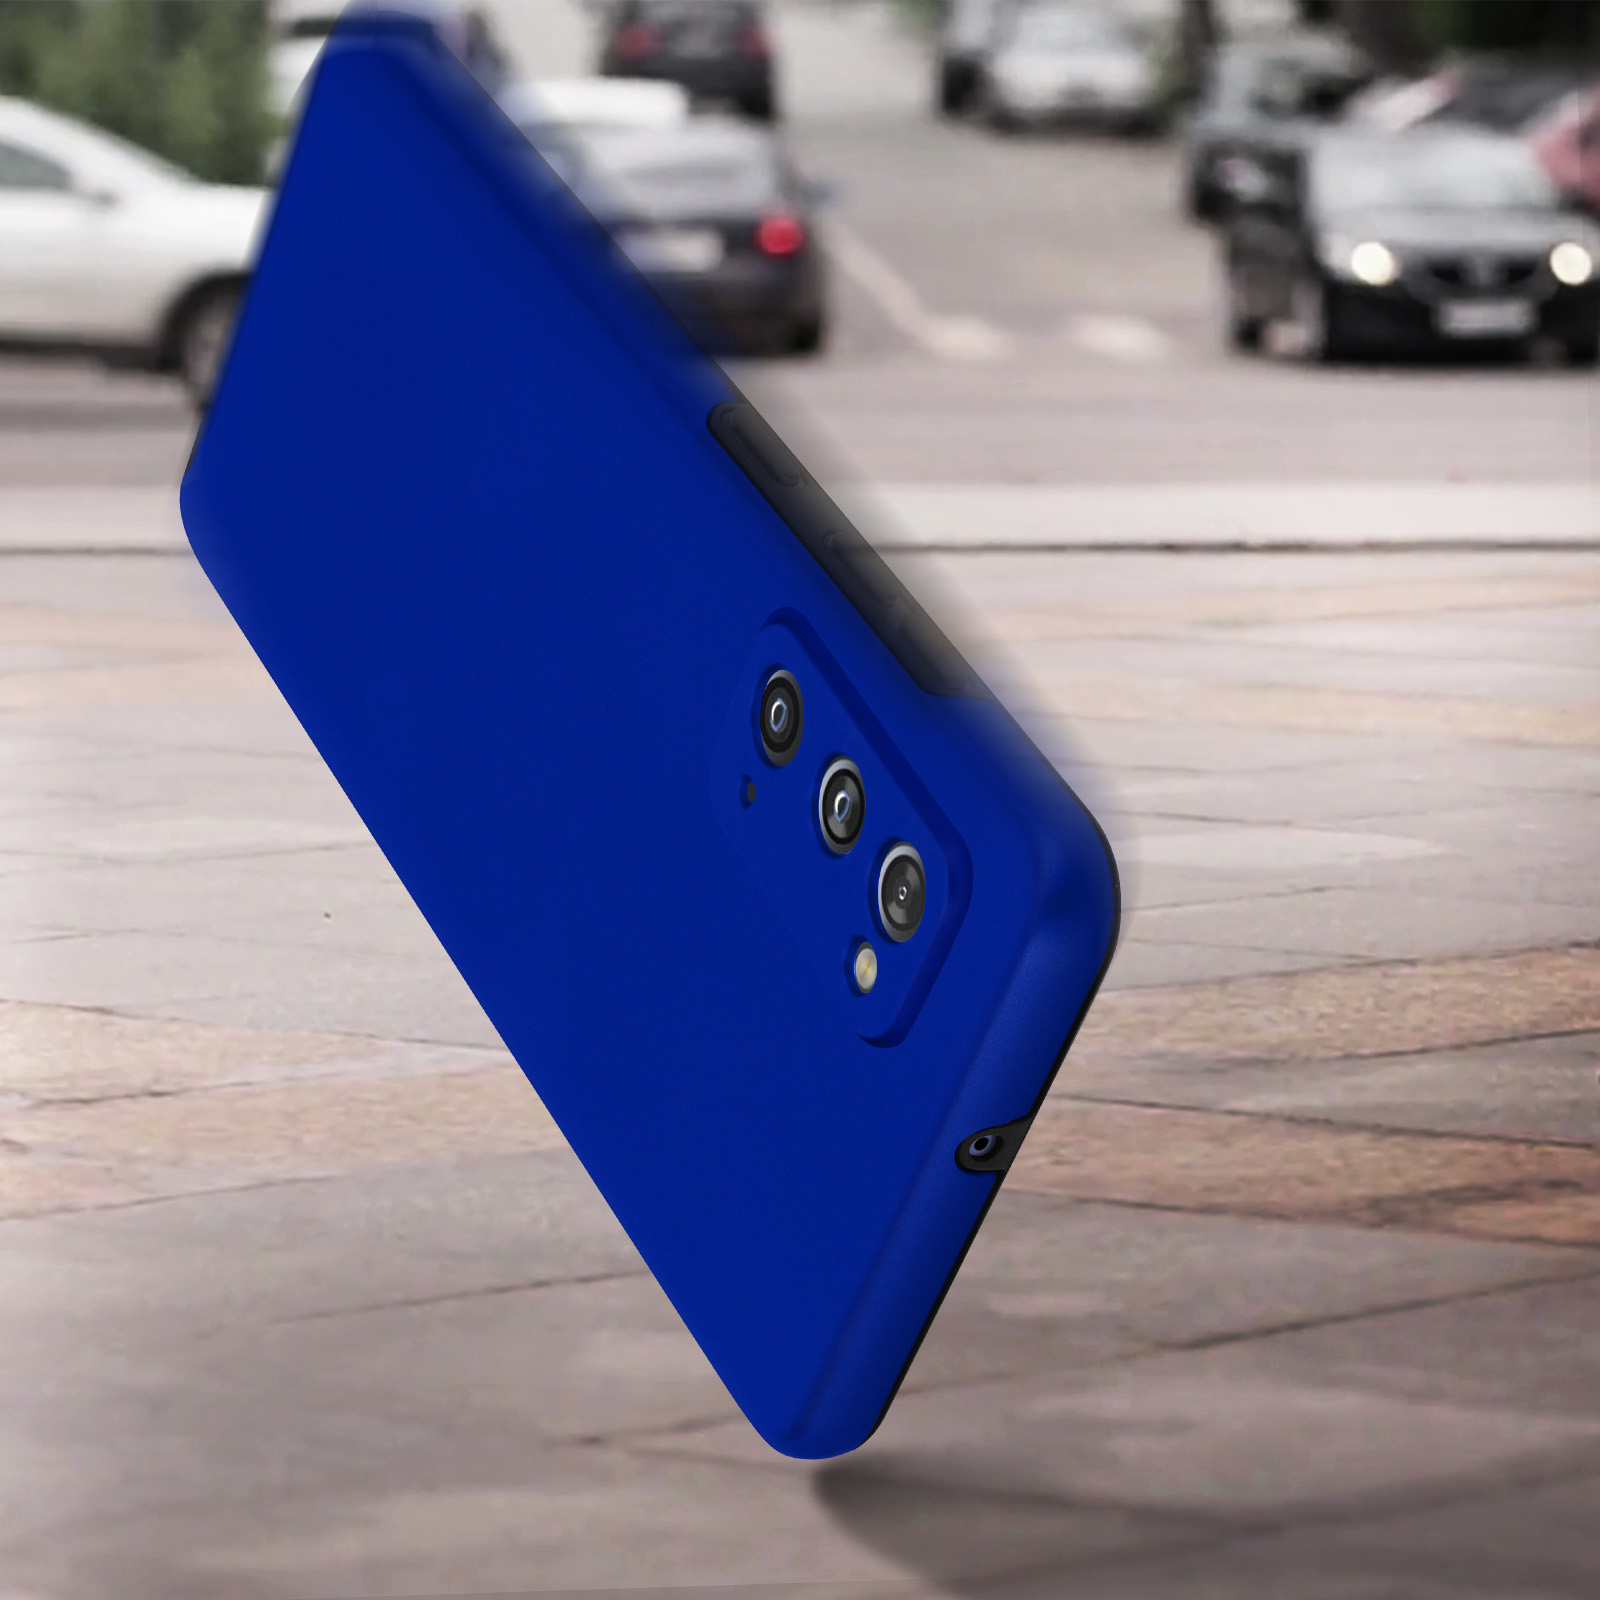 Cover, AVIZAR Galaxy Rundumschutz Full Blau FE, S20 Samsung, Series,